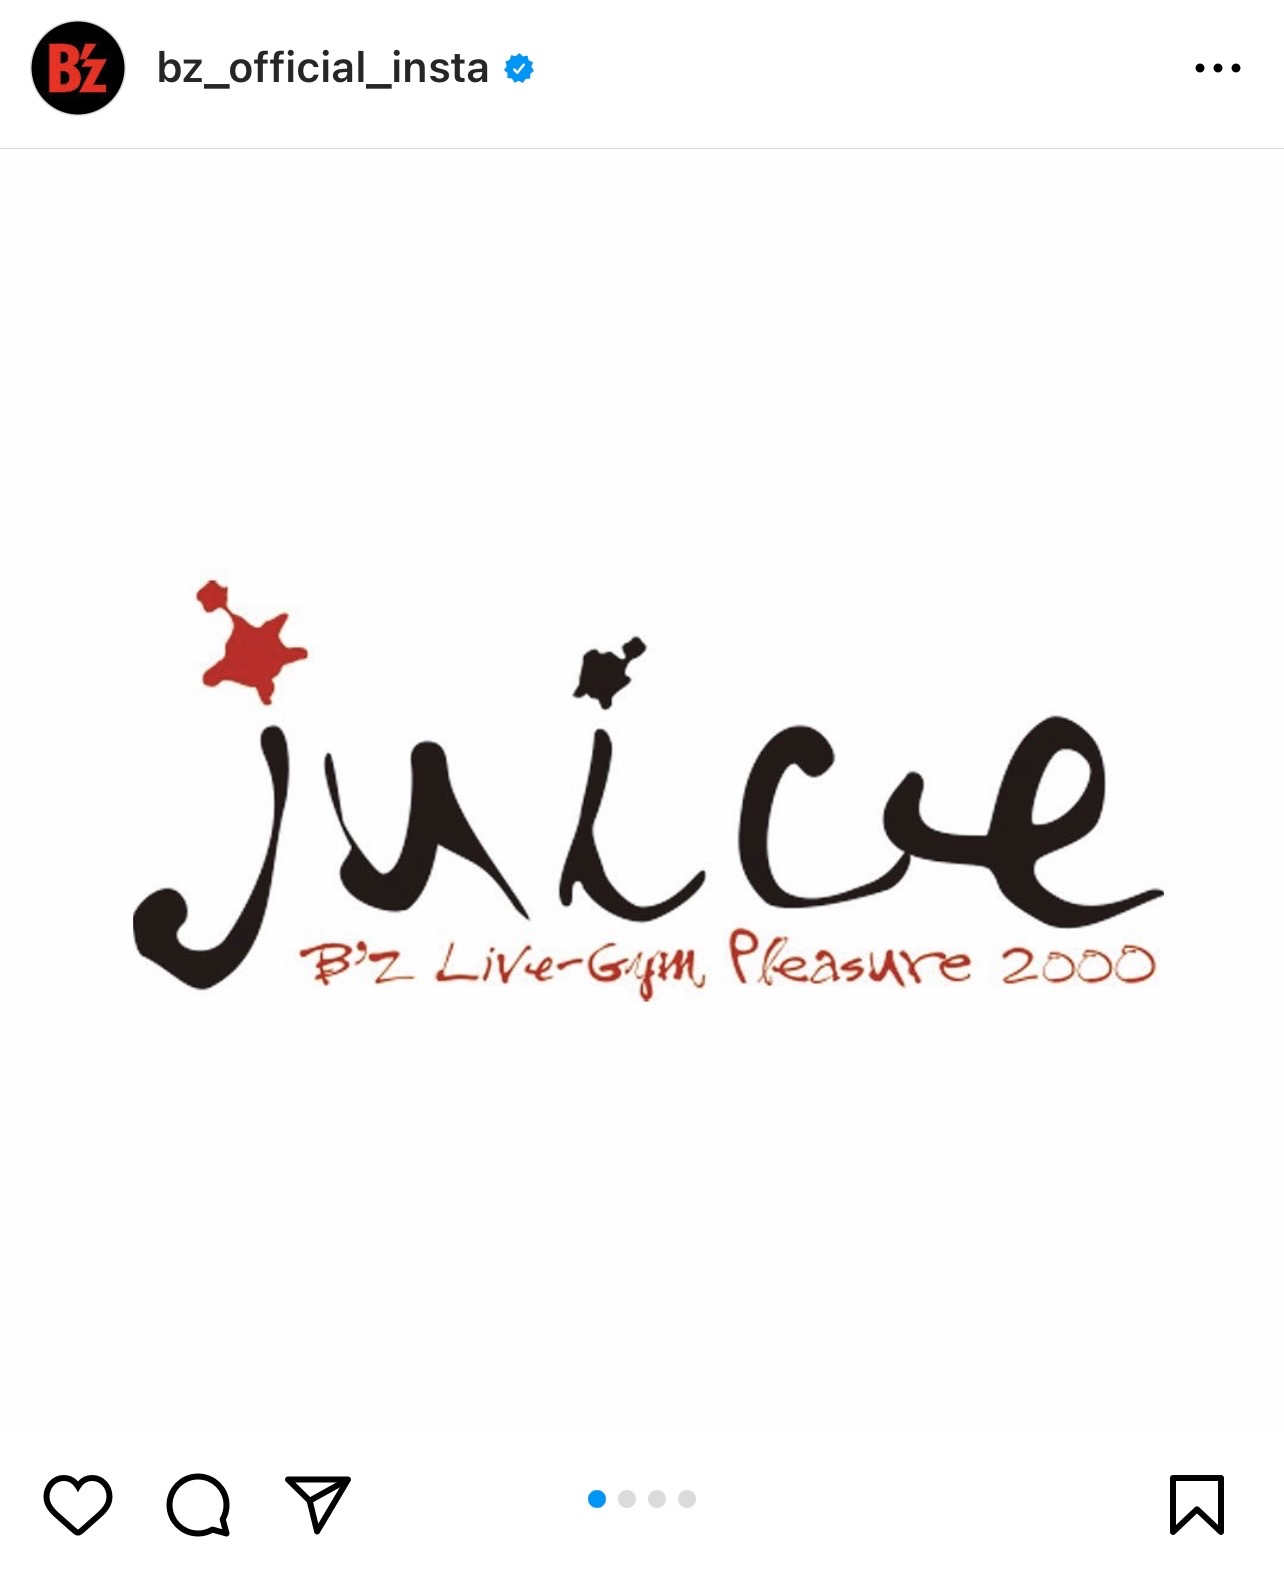 『B'z LIVE-GYM Pleasure 2000 “juice”』のロゴ画像